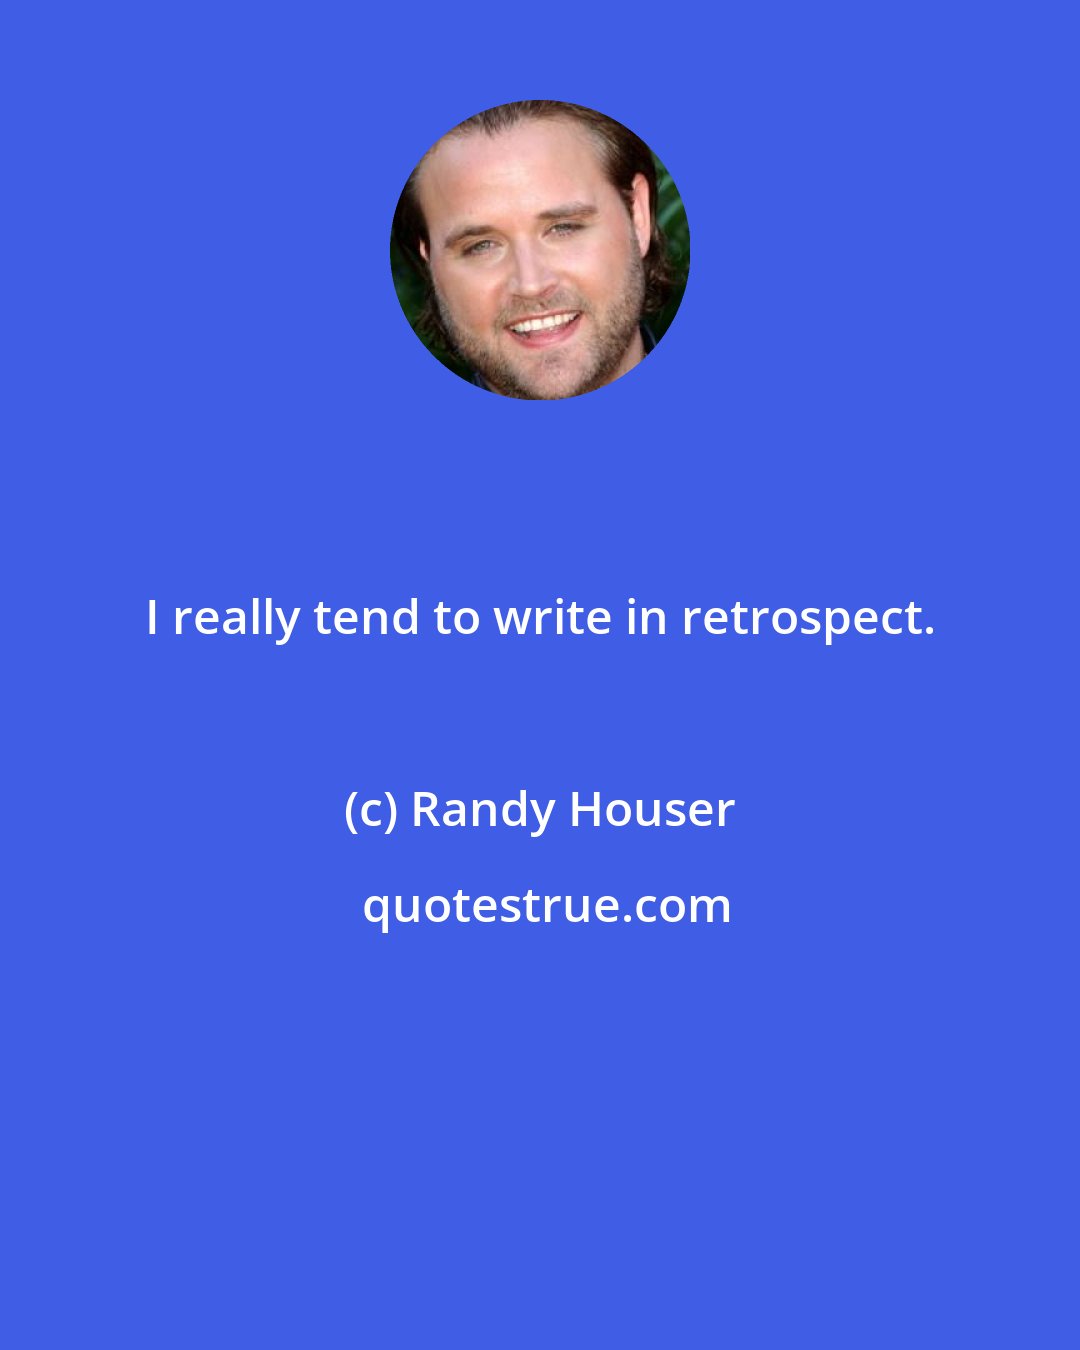 Randy Houser: I really tend to write in retrospect.